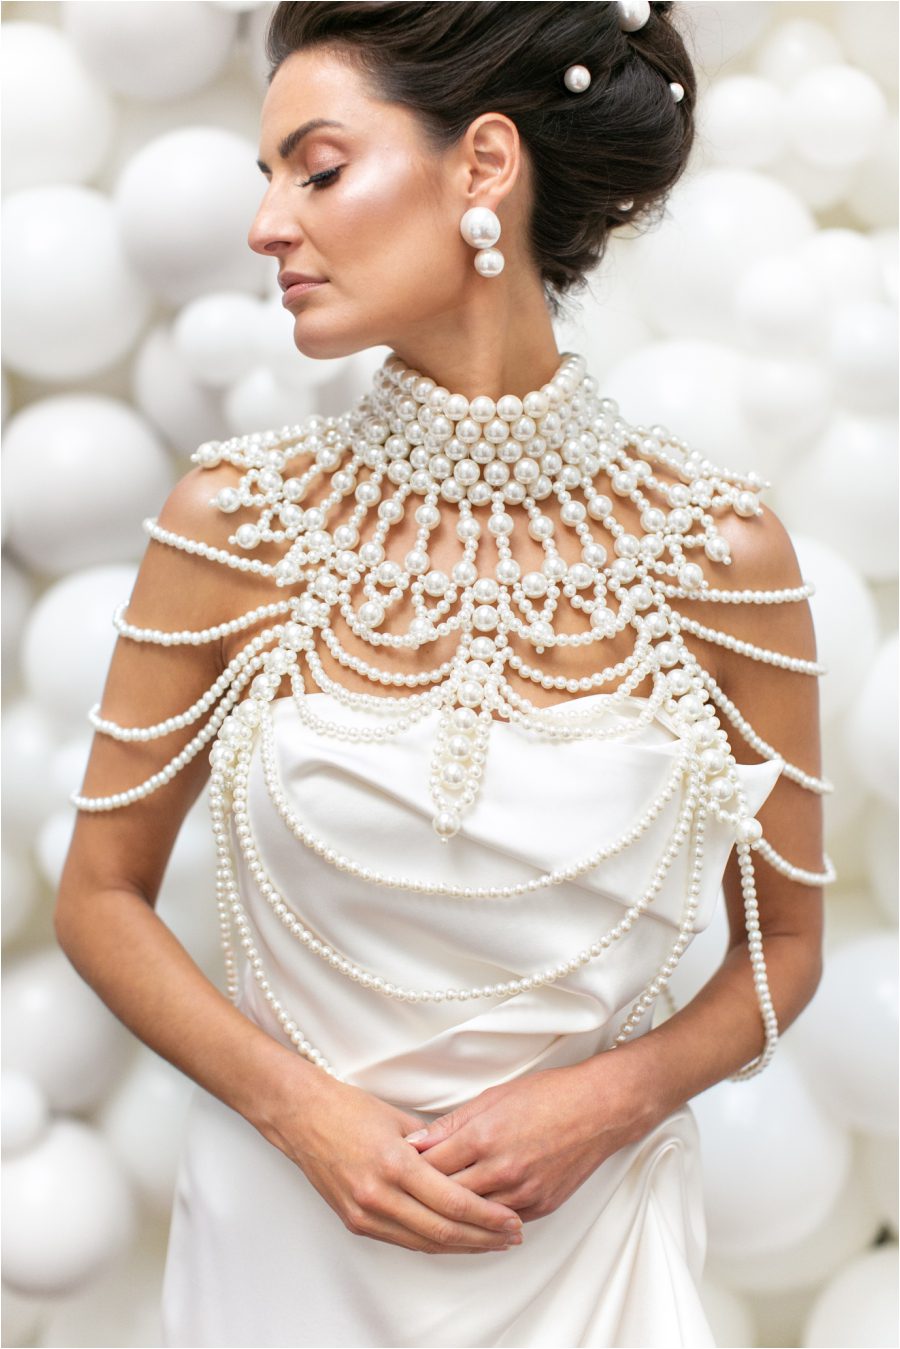 Modern bride wearing statement pearl necklace